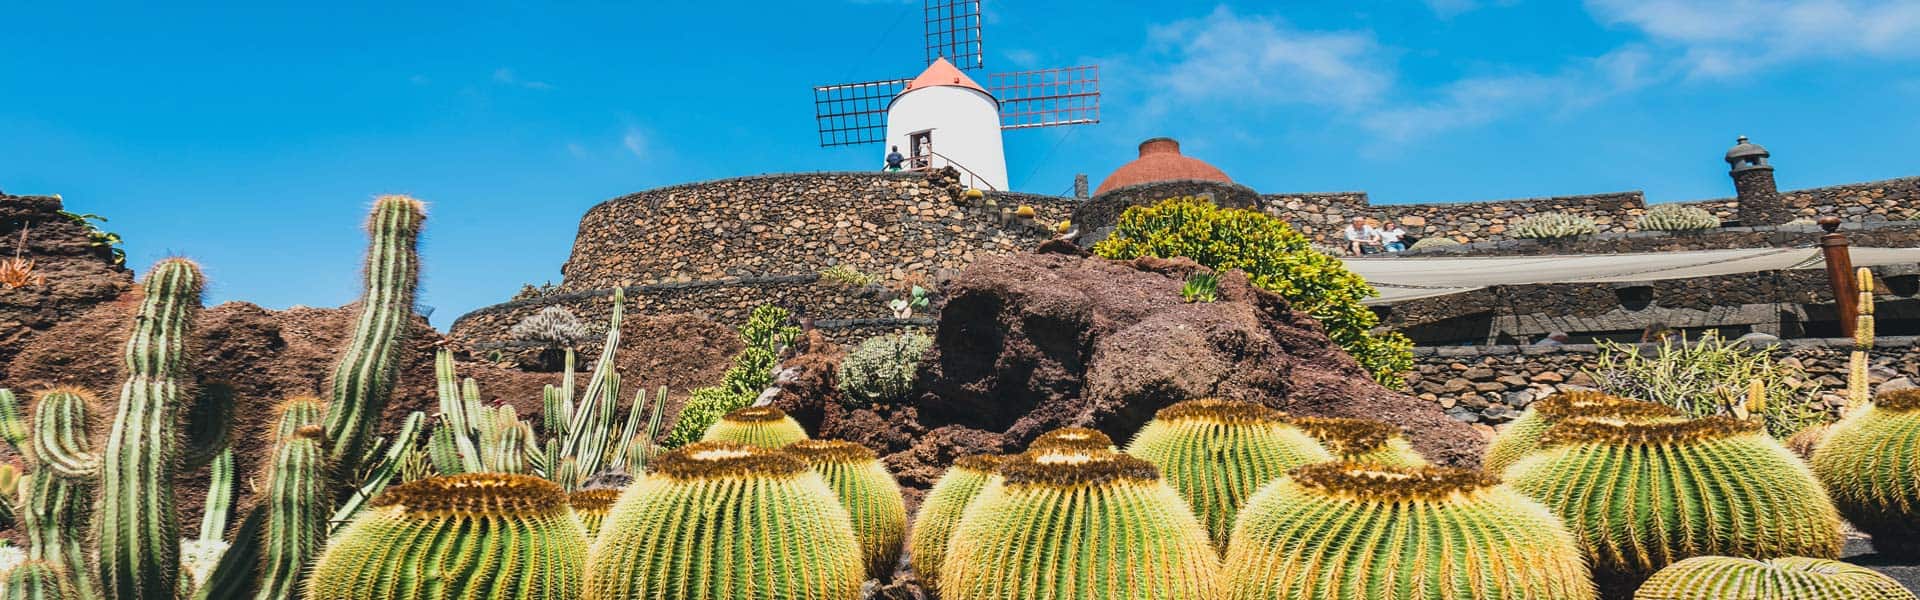 Kakteengarten Jardin de Cactus, Lanzarote – Werk des lanzerotenischen Künstlers César Manrique